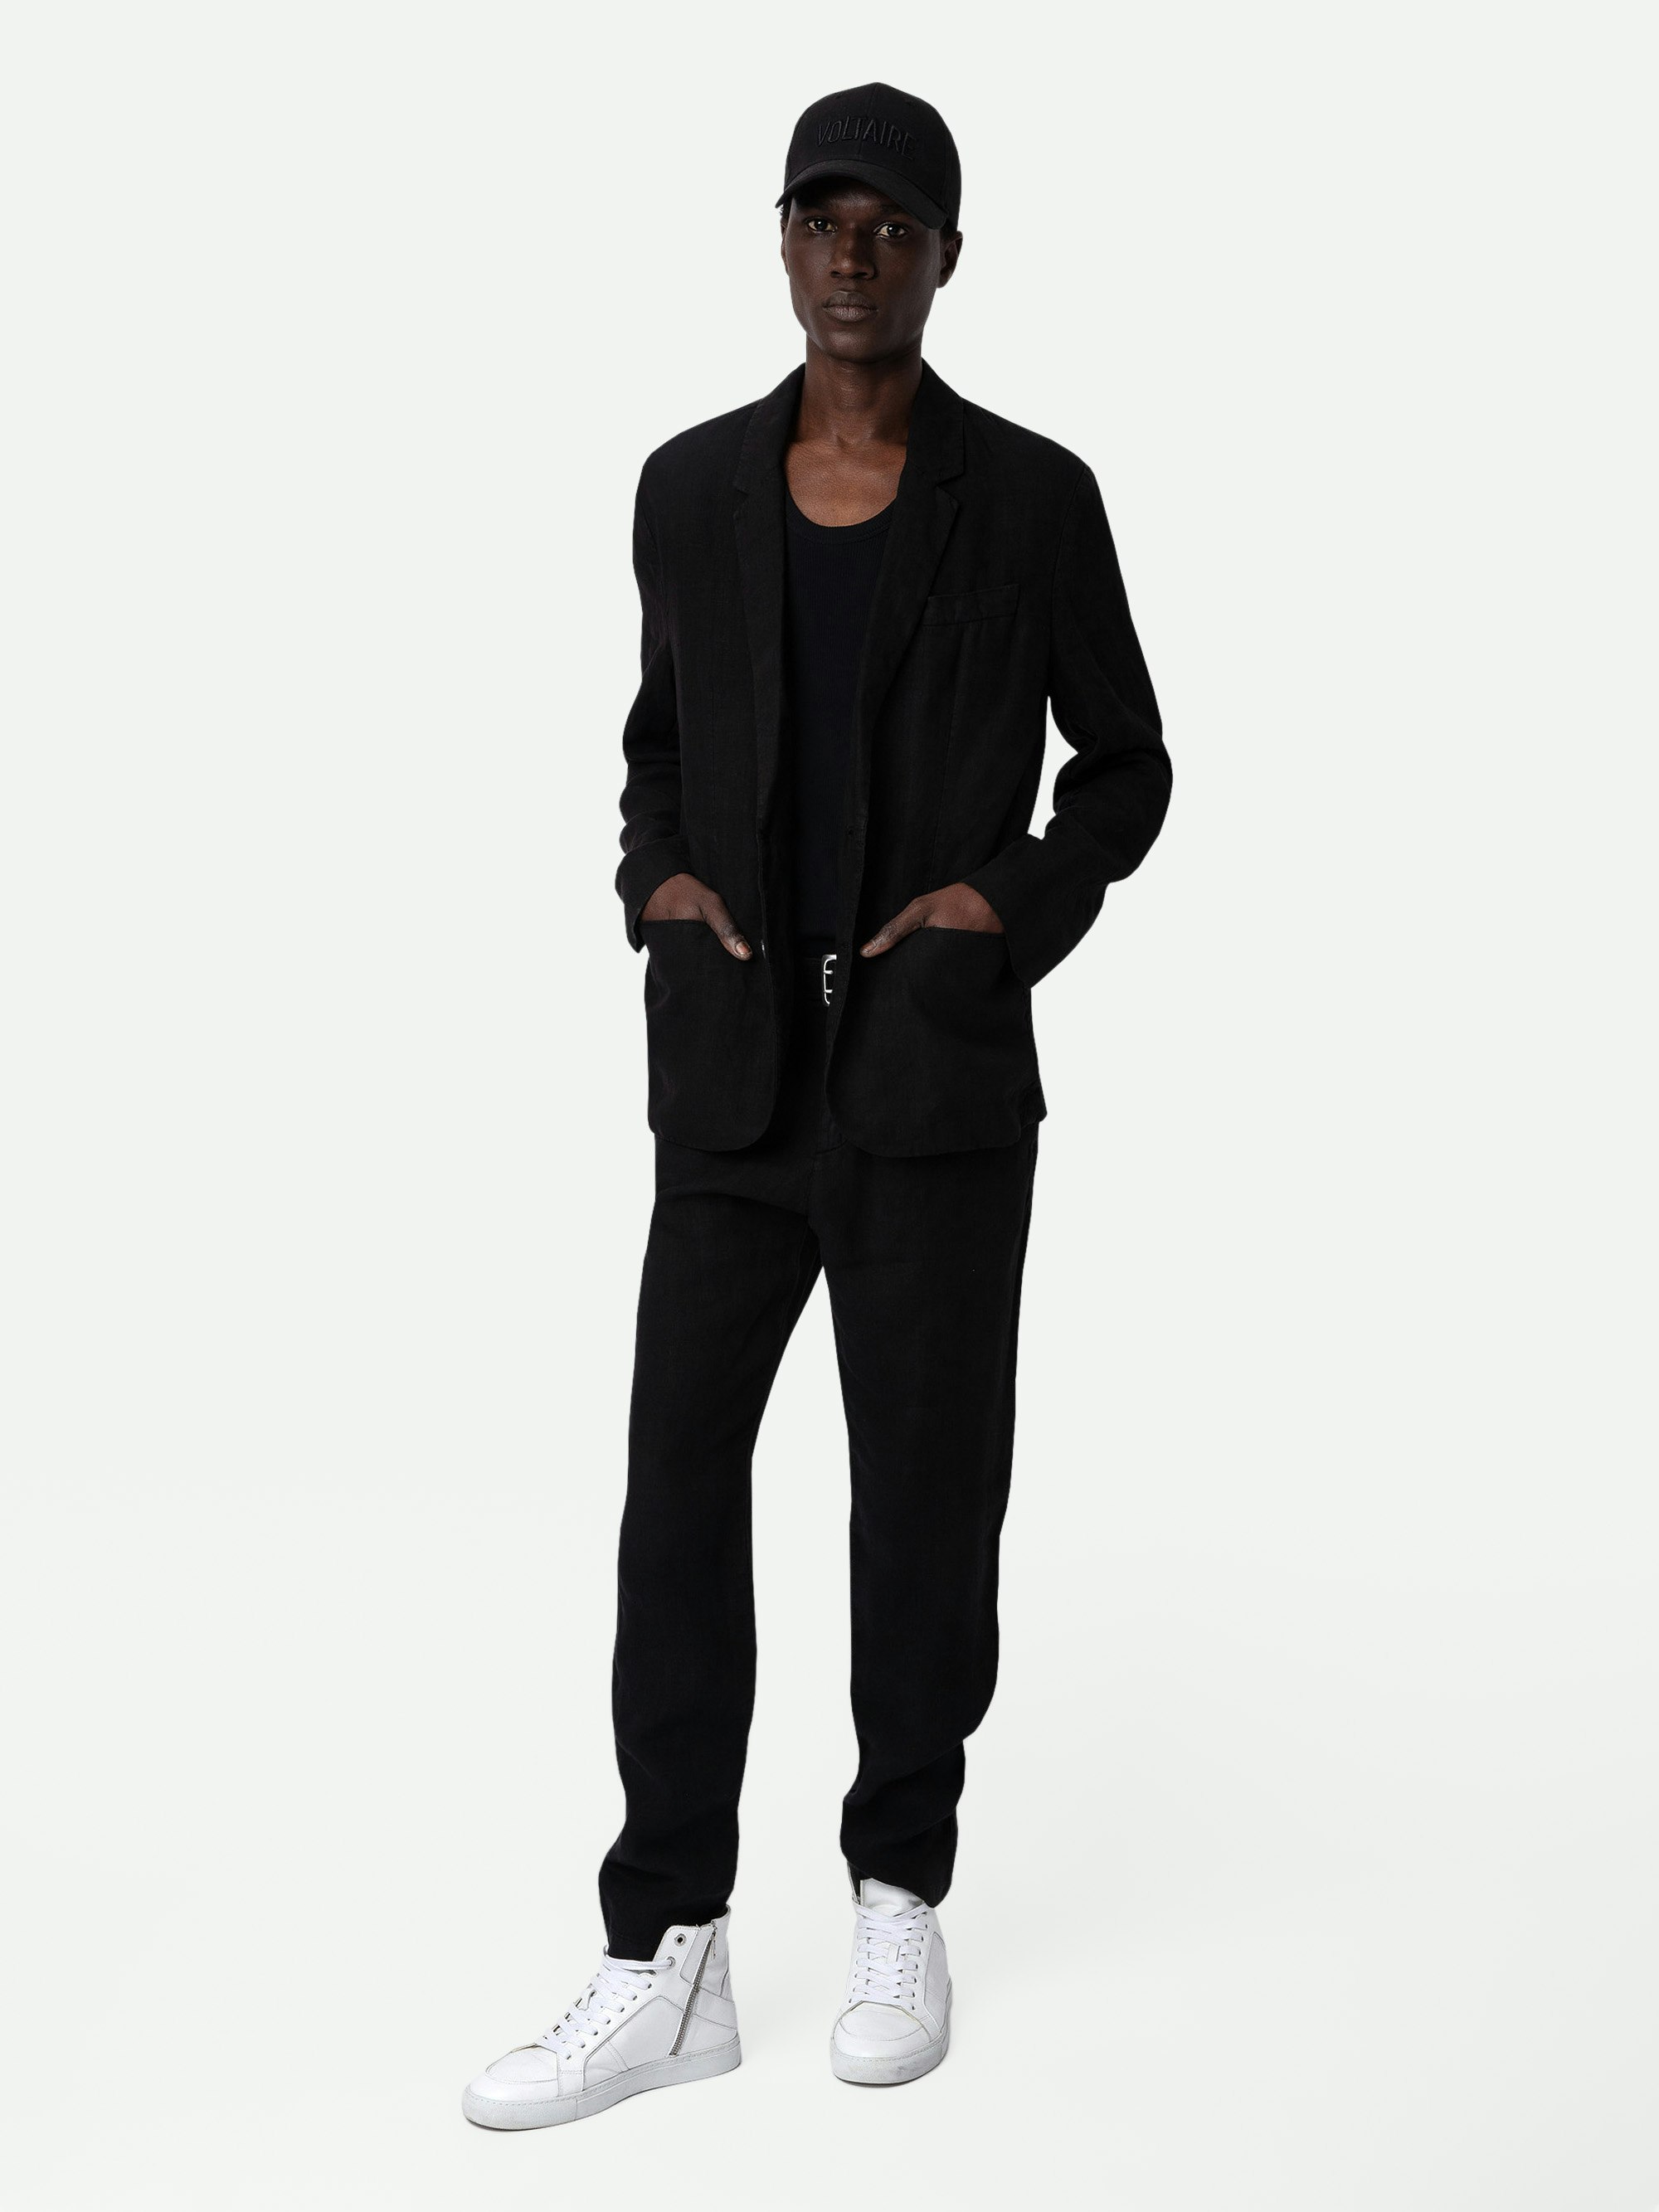 Viks Linen Blazer - Black washed linen structured blazer with button closure and pockets.